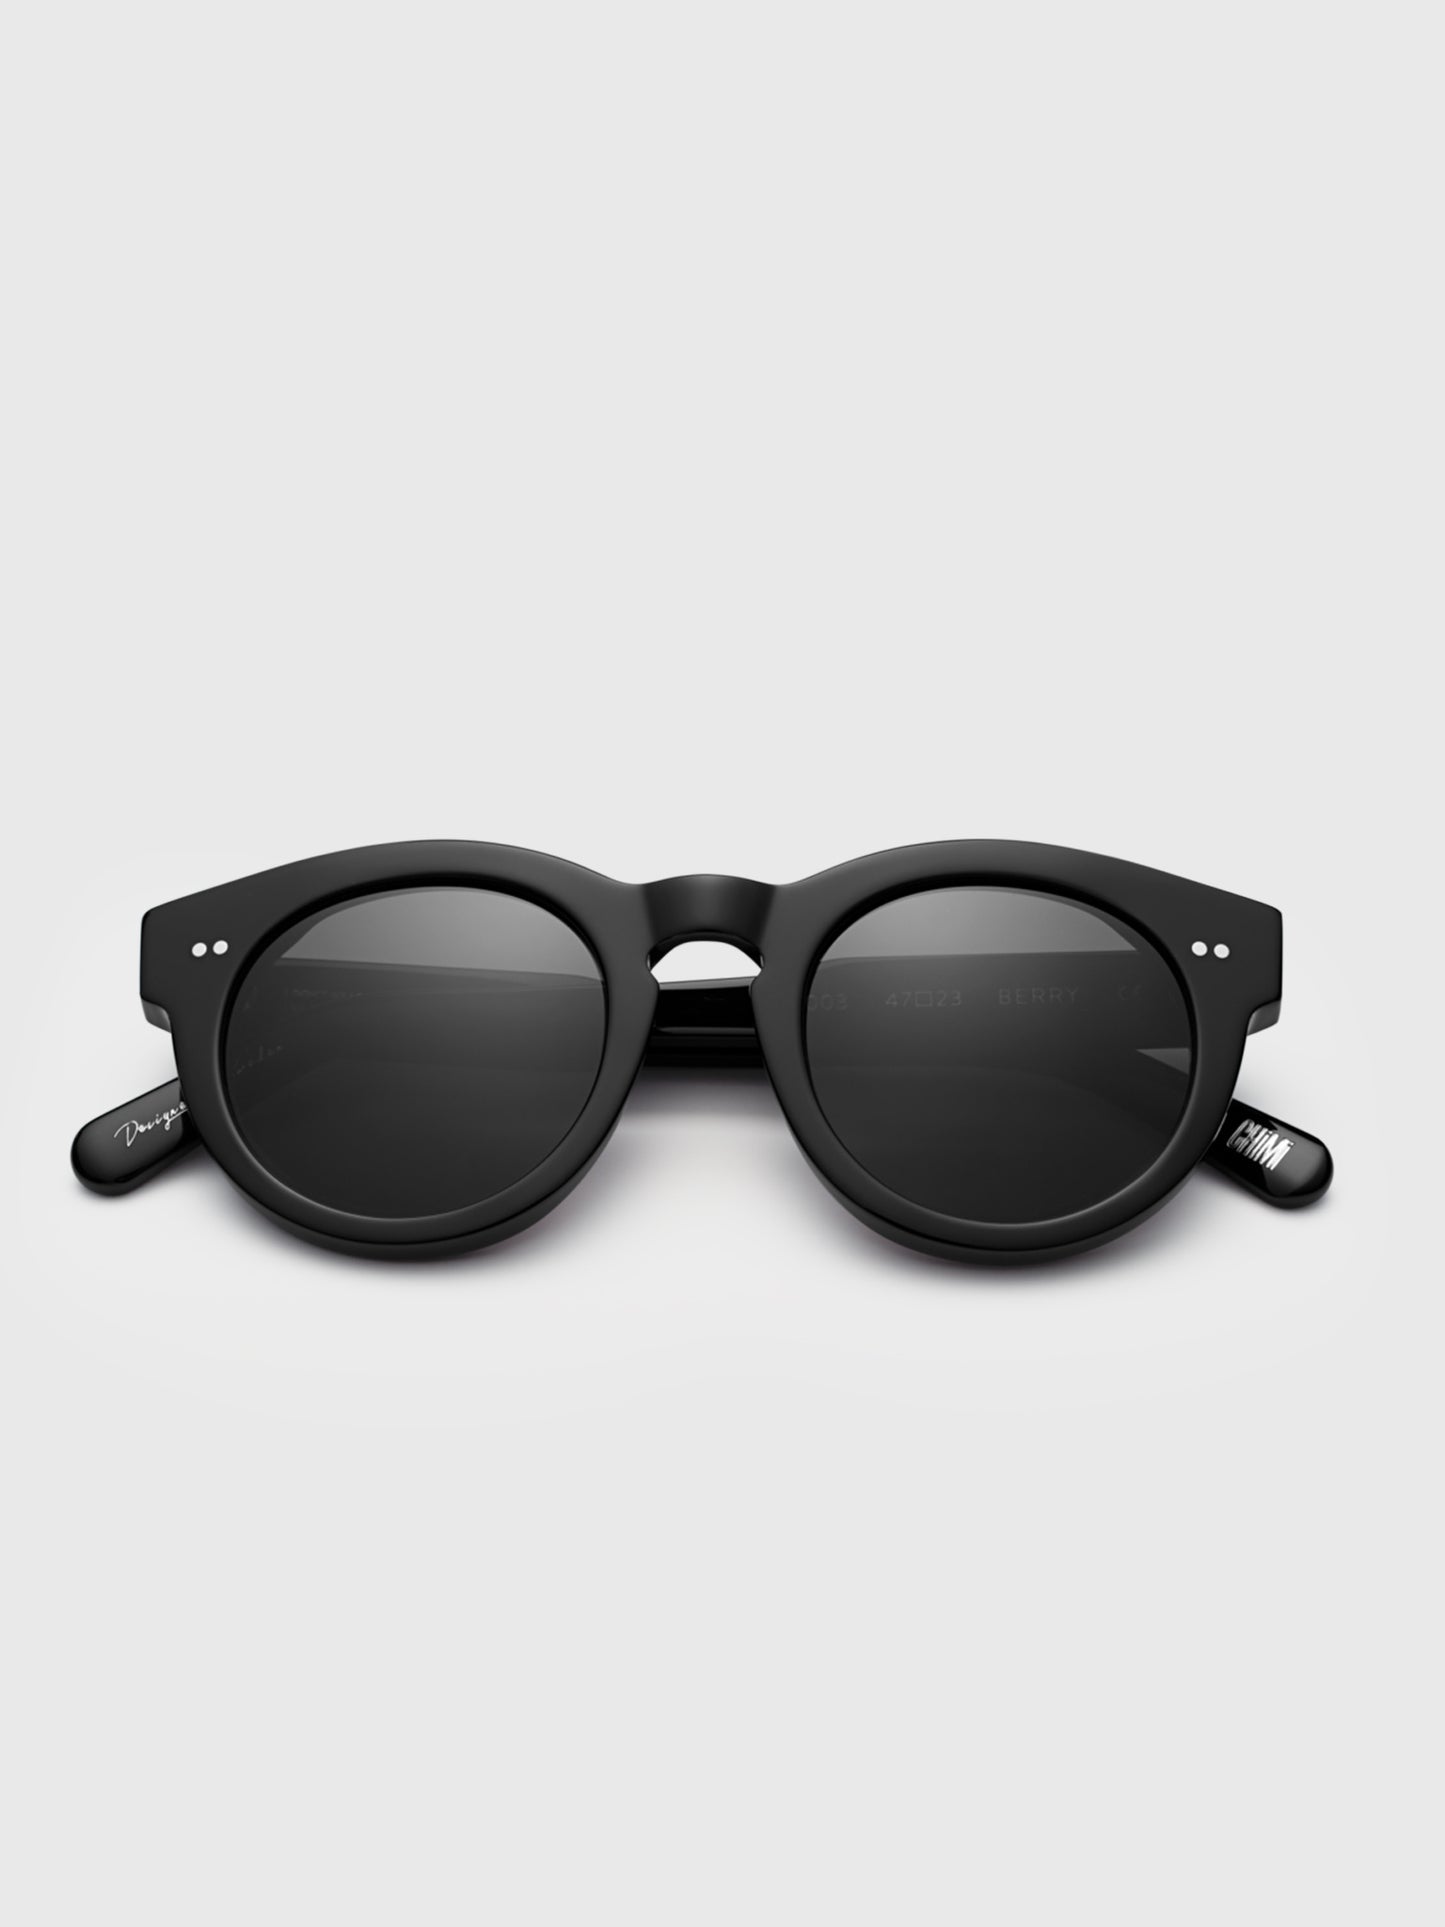 Chimi Berry #003 Black Sunglasses